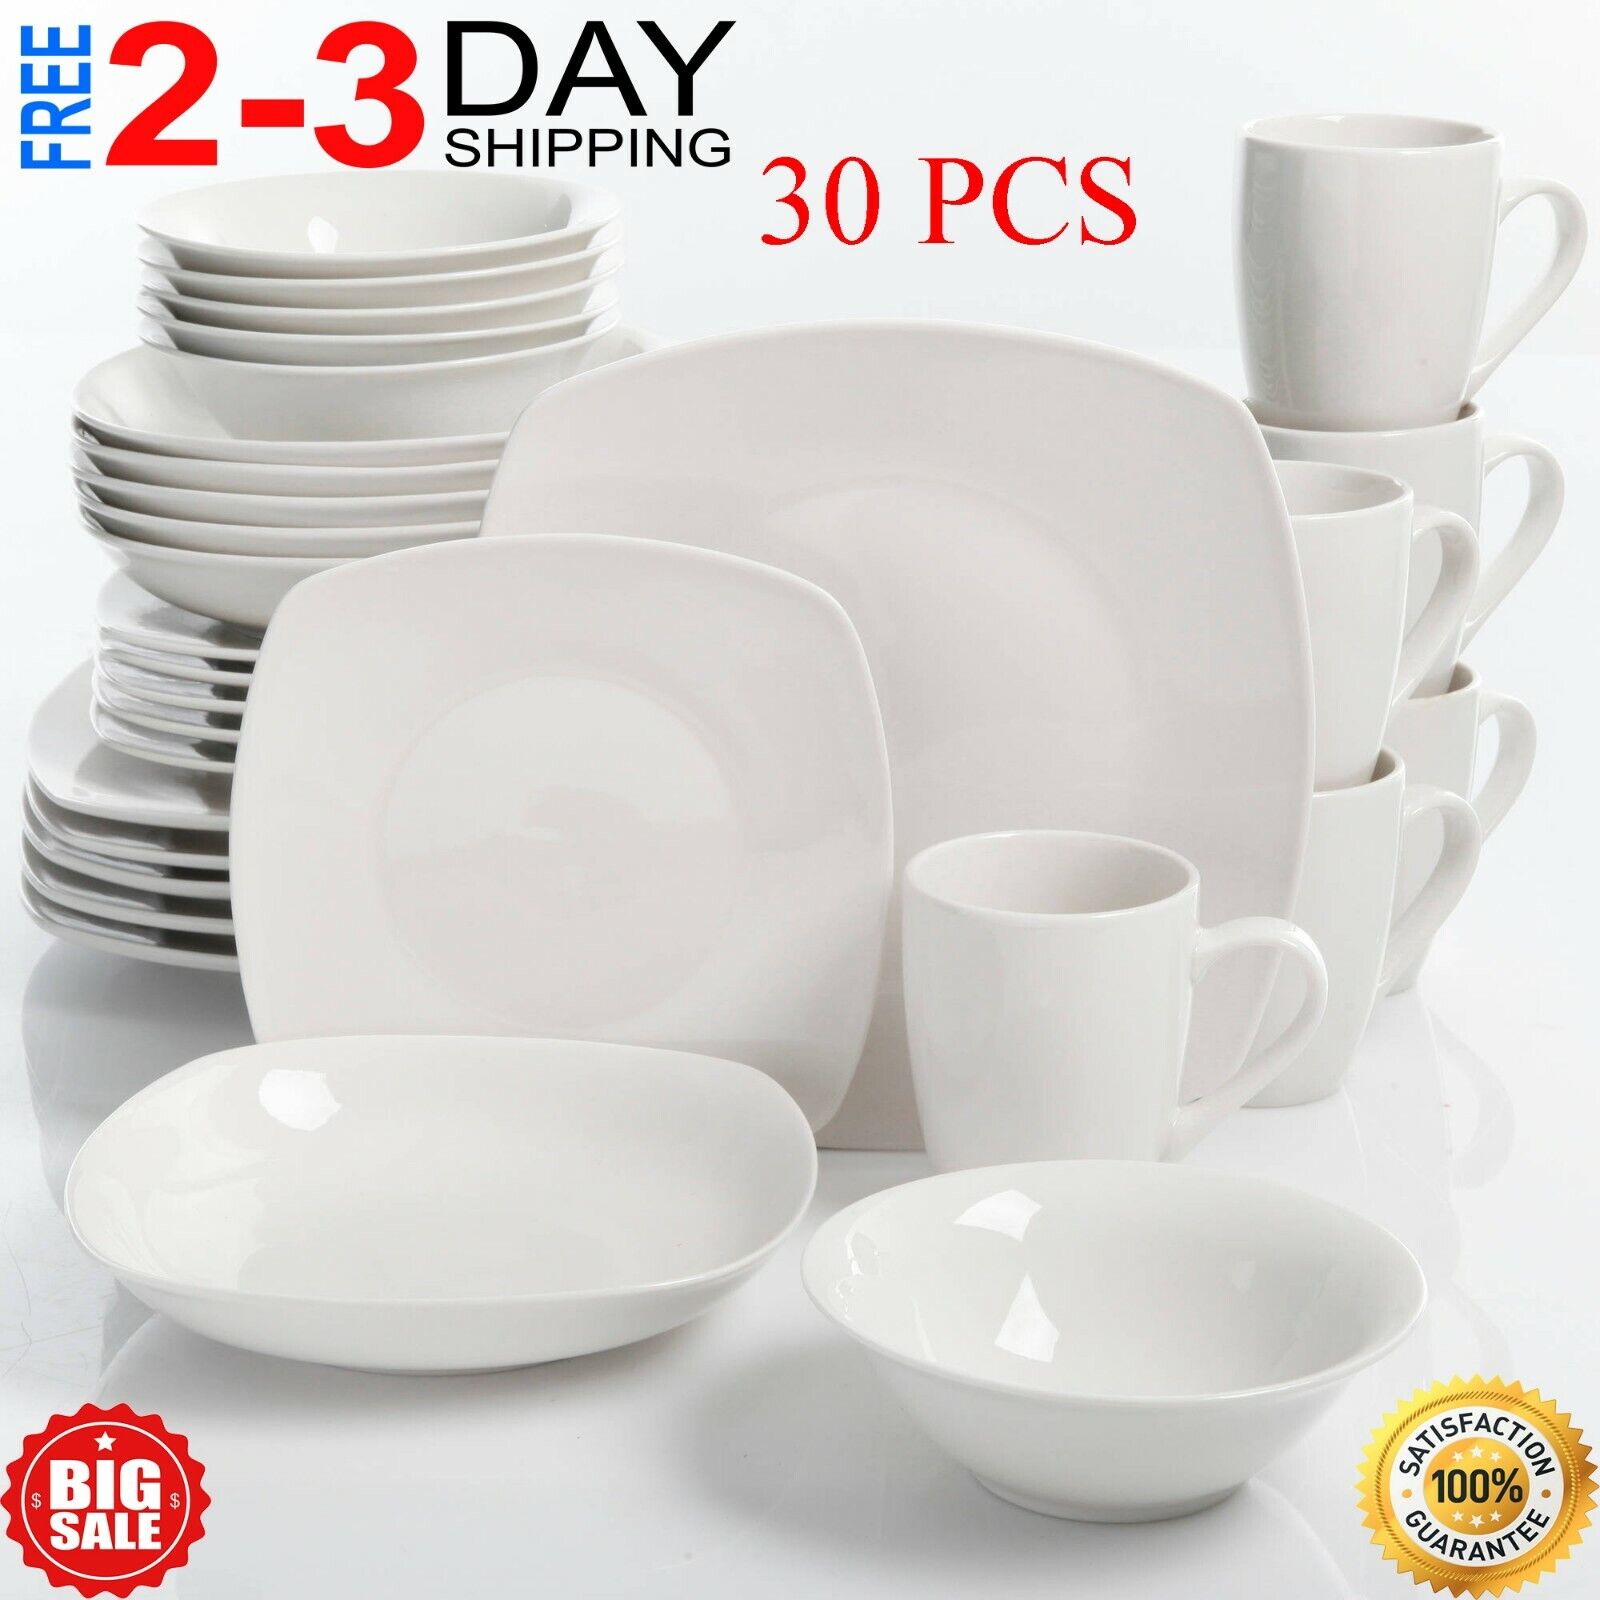 White Ceramic Kitchen Dish Square Dinner Plates Mugs New